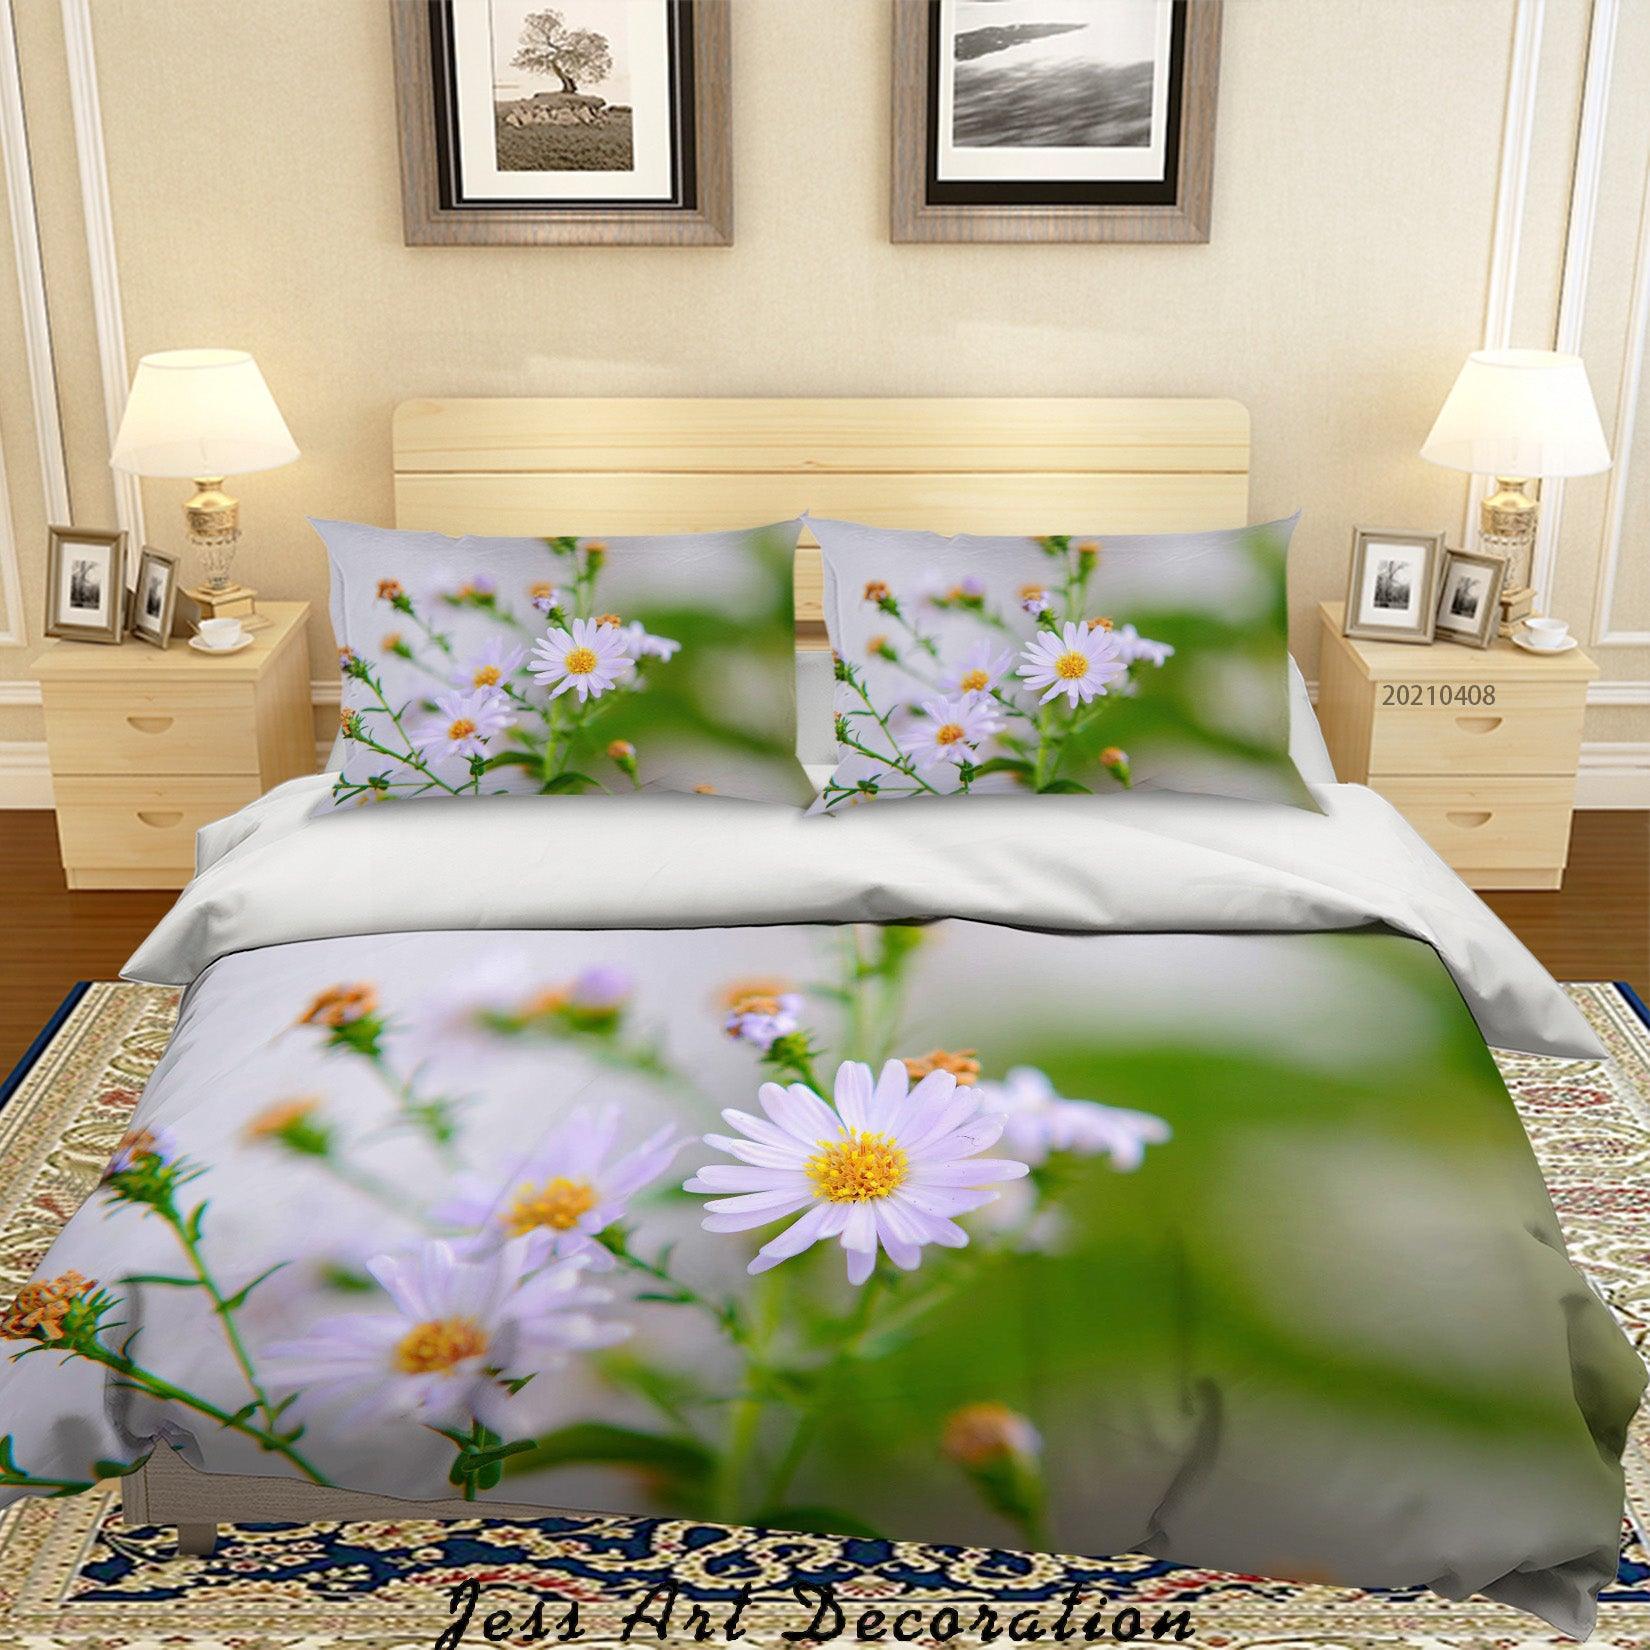 3D White Chrysanthemum Quilt Cover Set Bedding Set Duvet Cover Pillowcases 261- Jess Art Decoration